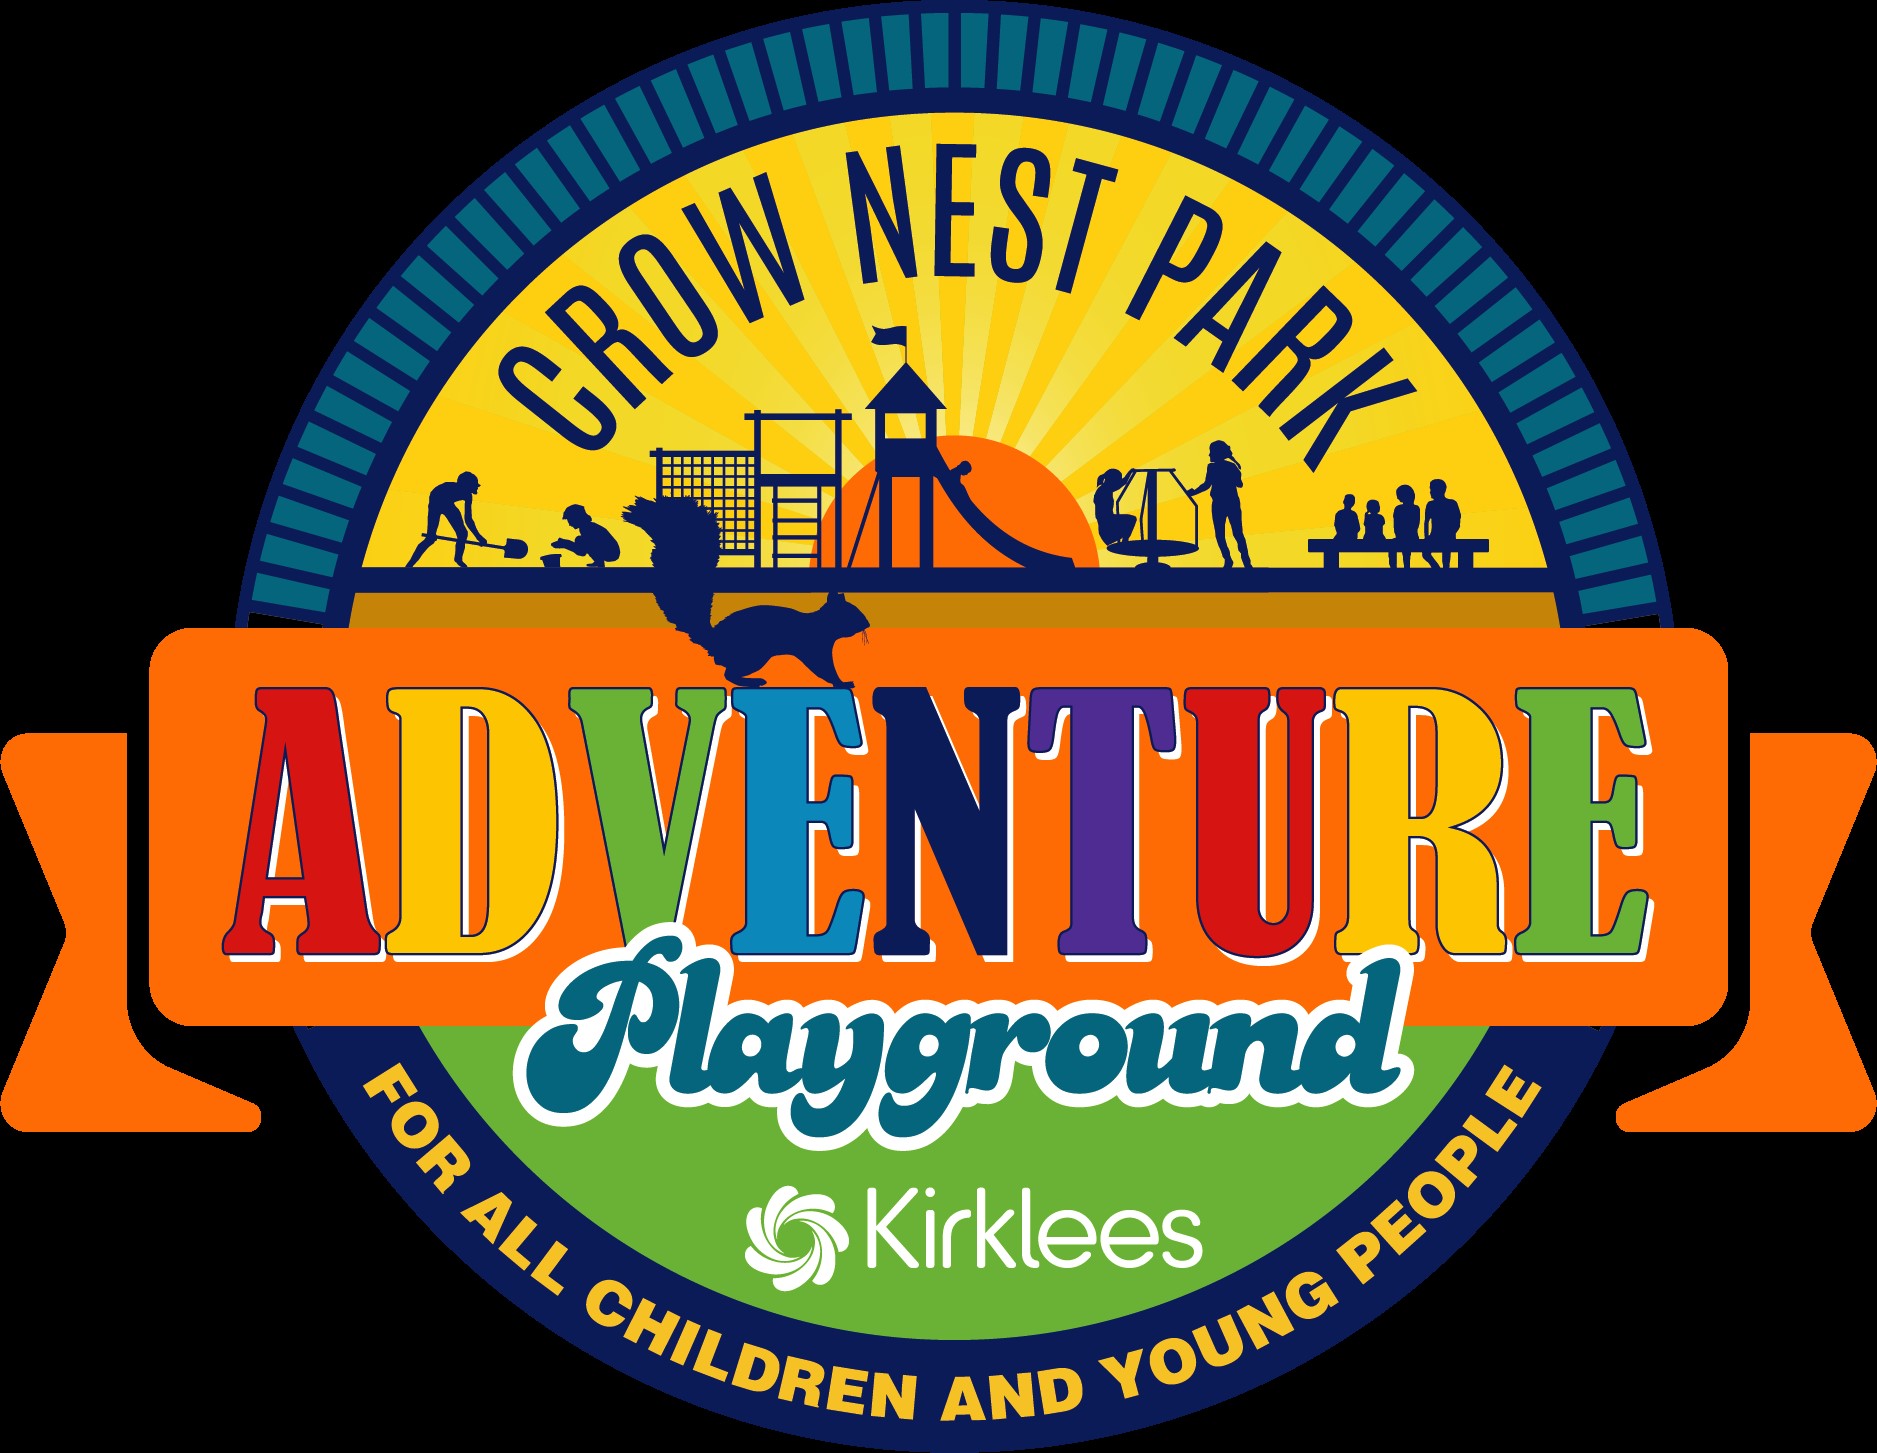 Crow Nest Park Adventure Playground logo